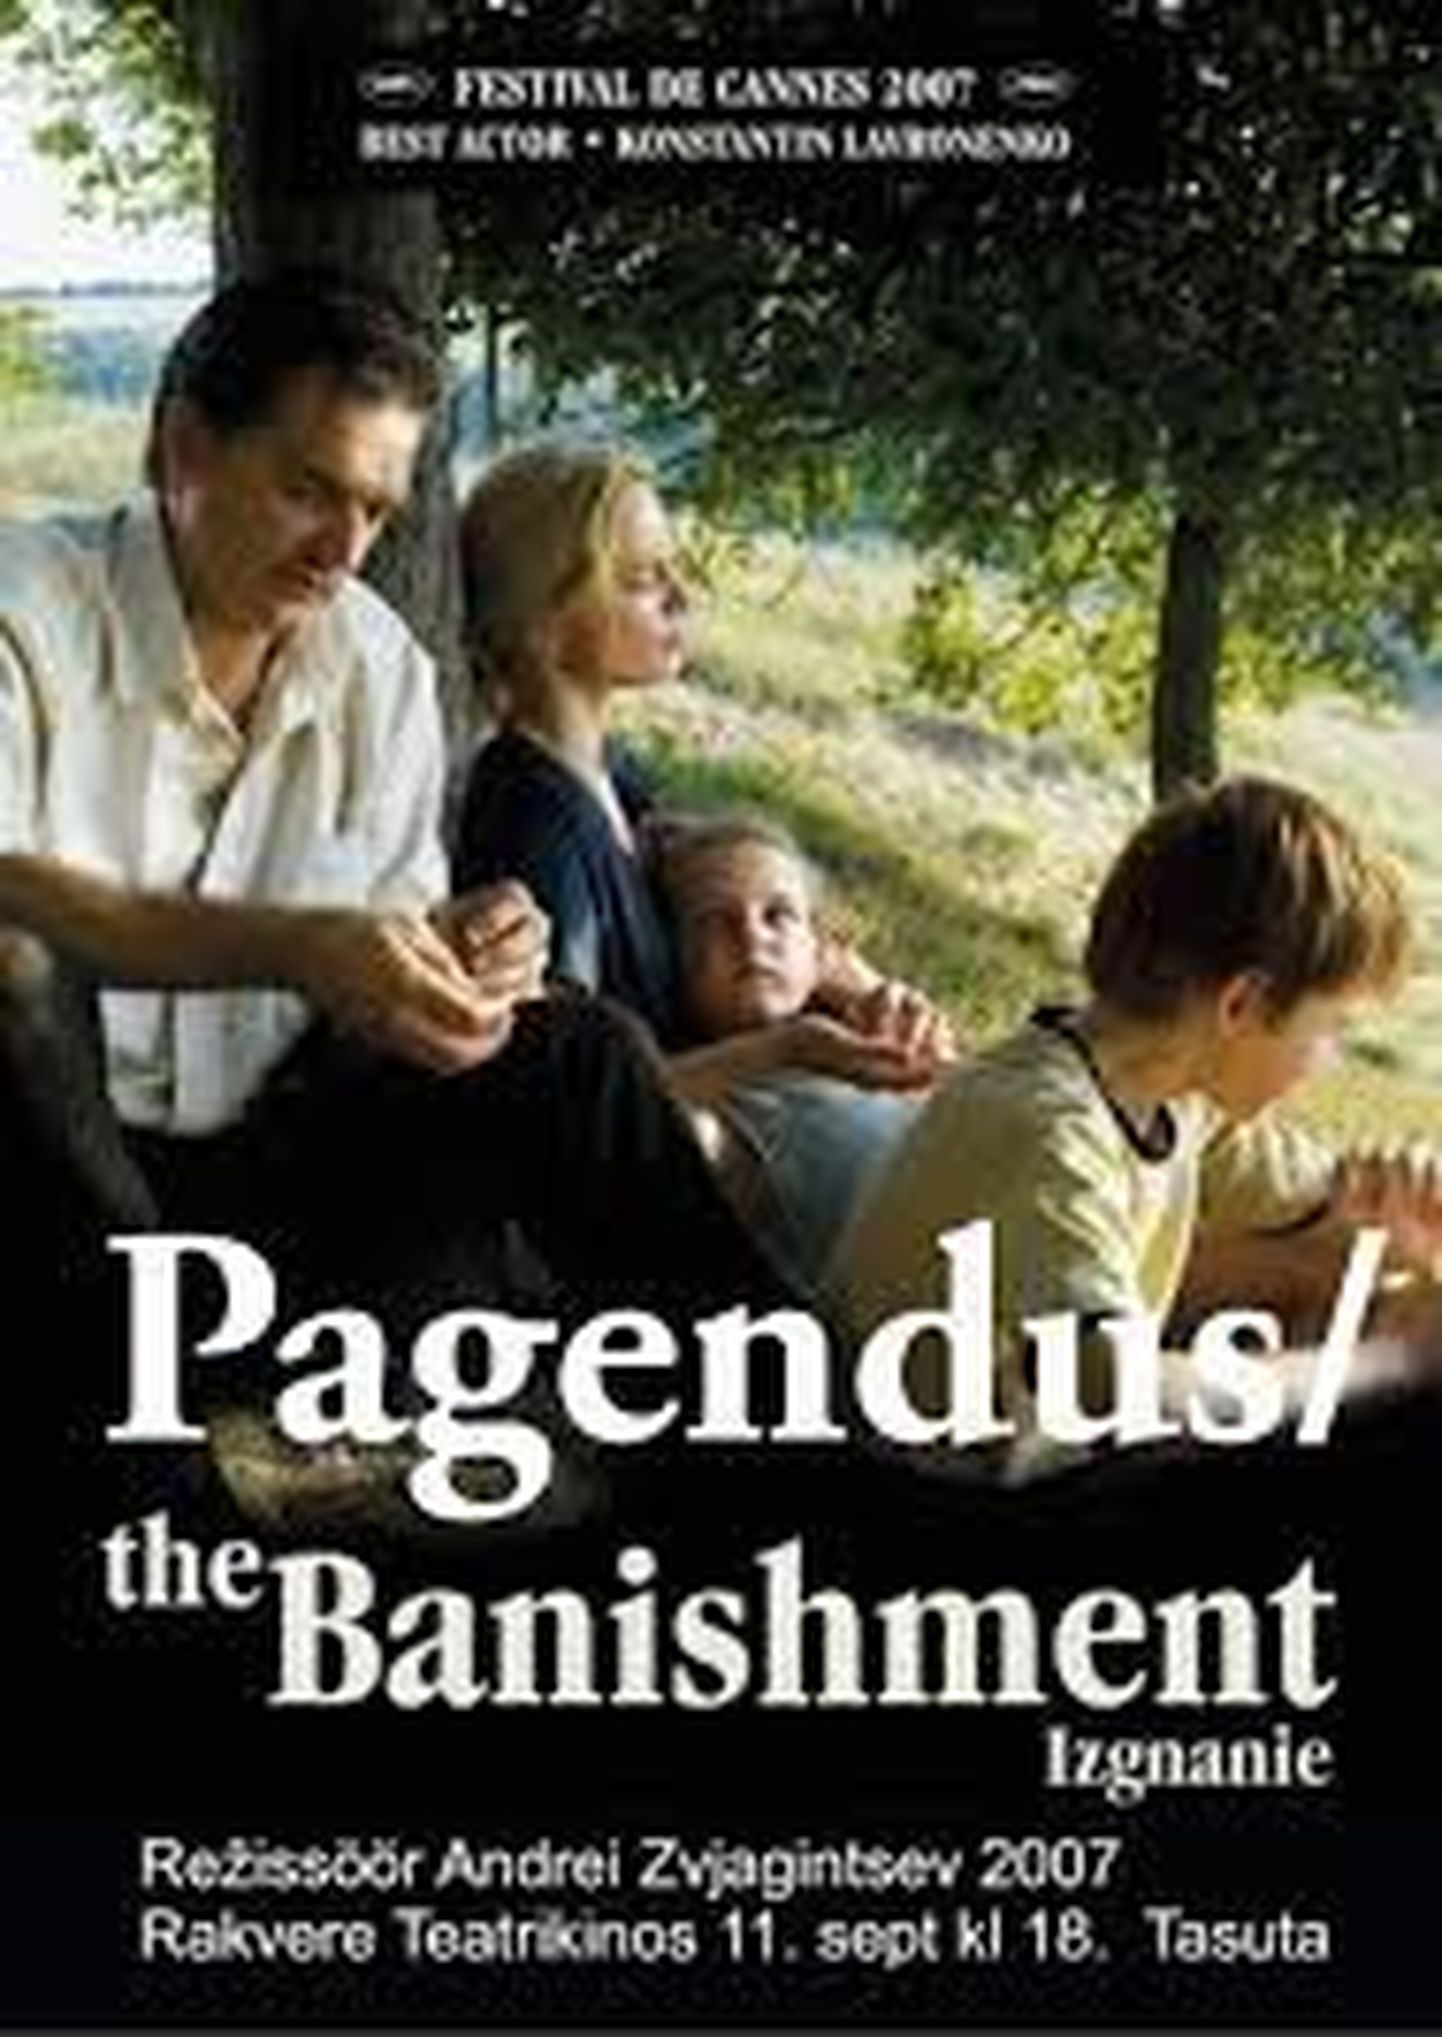 "Pagendus/The banishment".